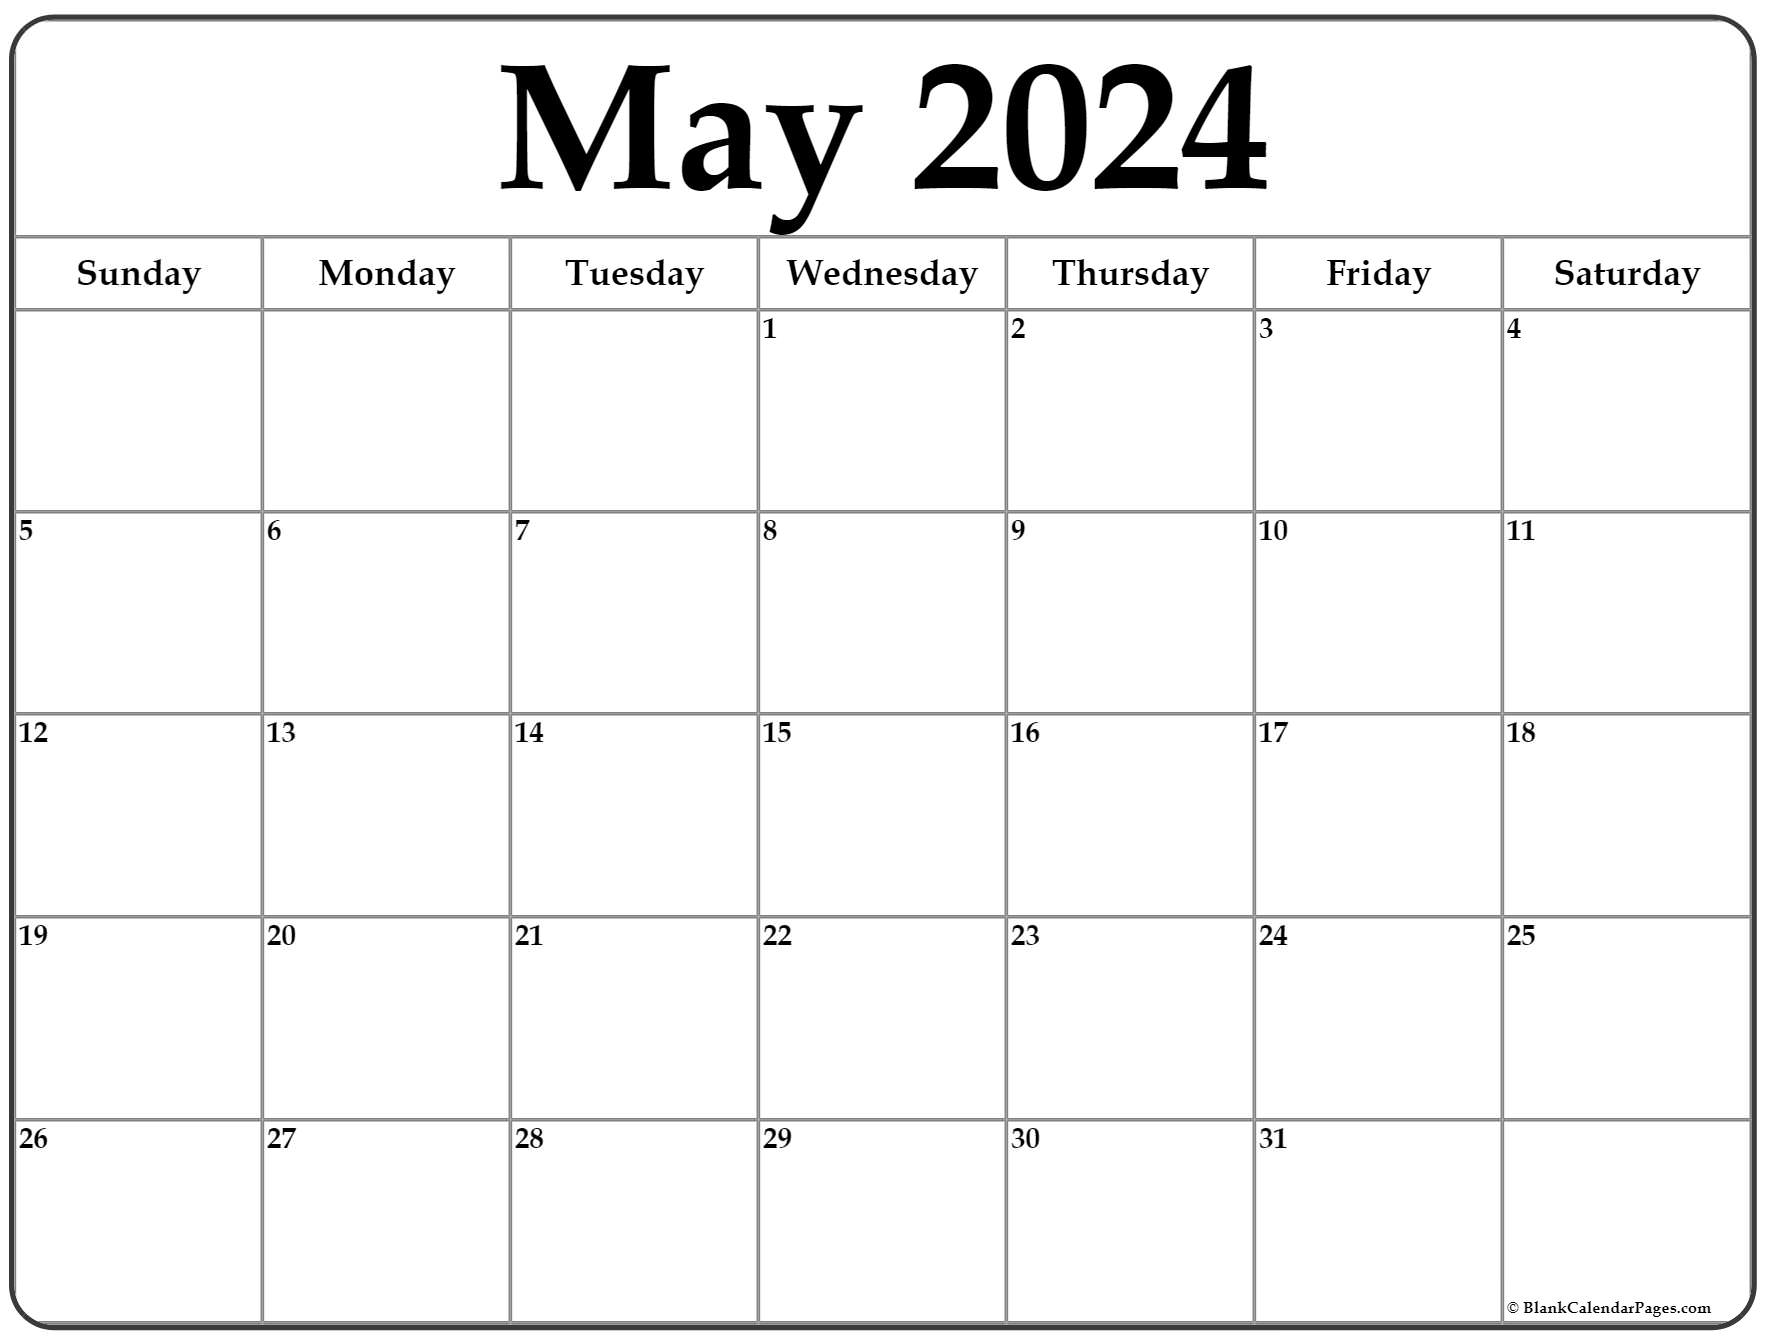 May Calendar Template 2022 May 2022 Calendar | Free Printable Calendar Templates